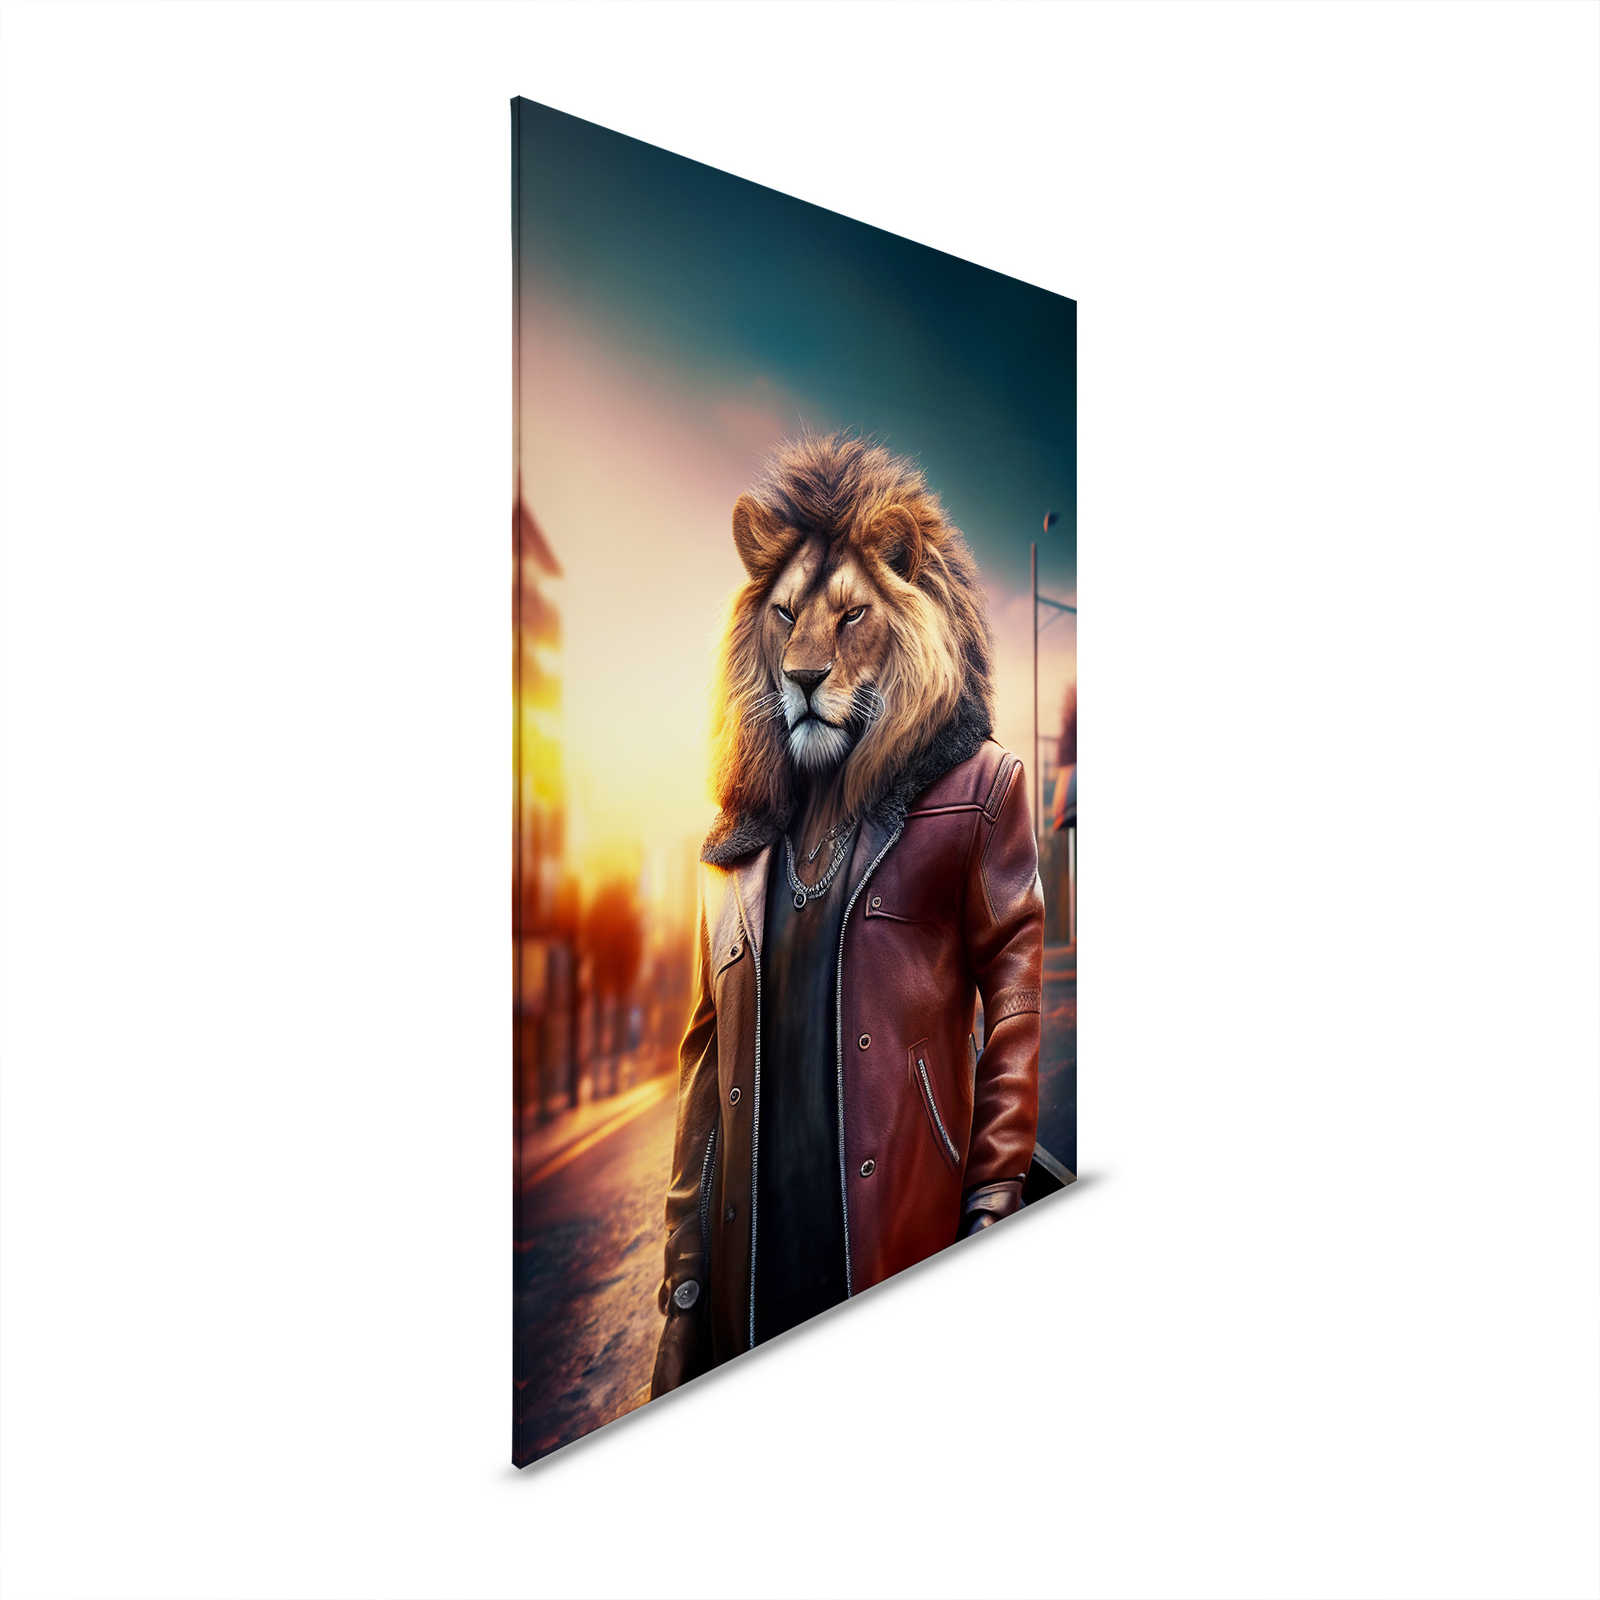 KI Canvas schilderij »Lion Biker« - 80 cm x 120 cm
